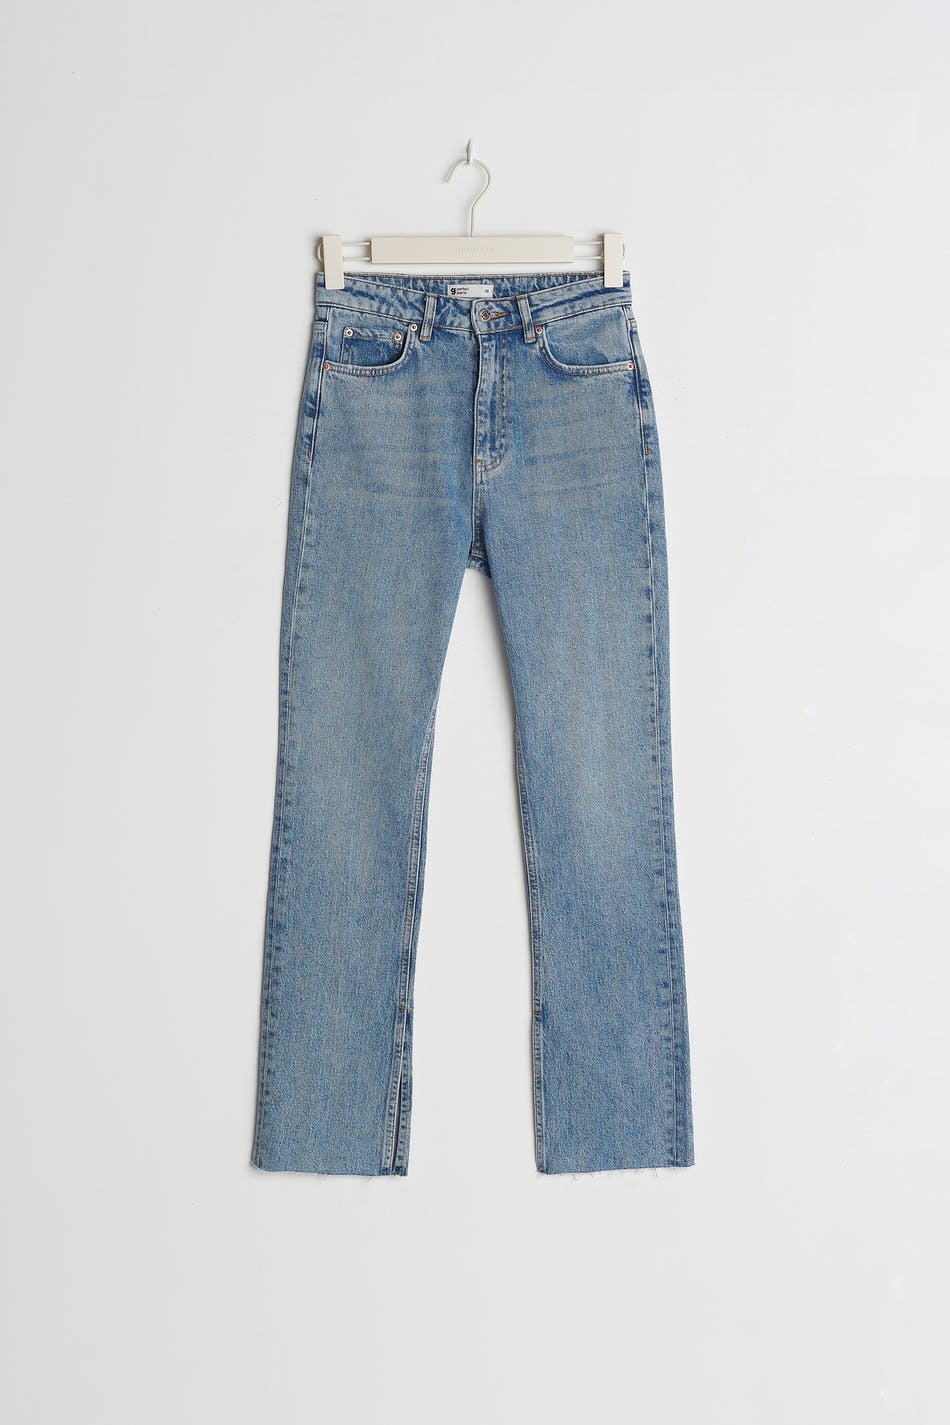 High waist petite slit jeans